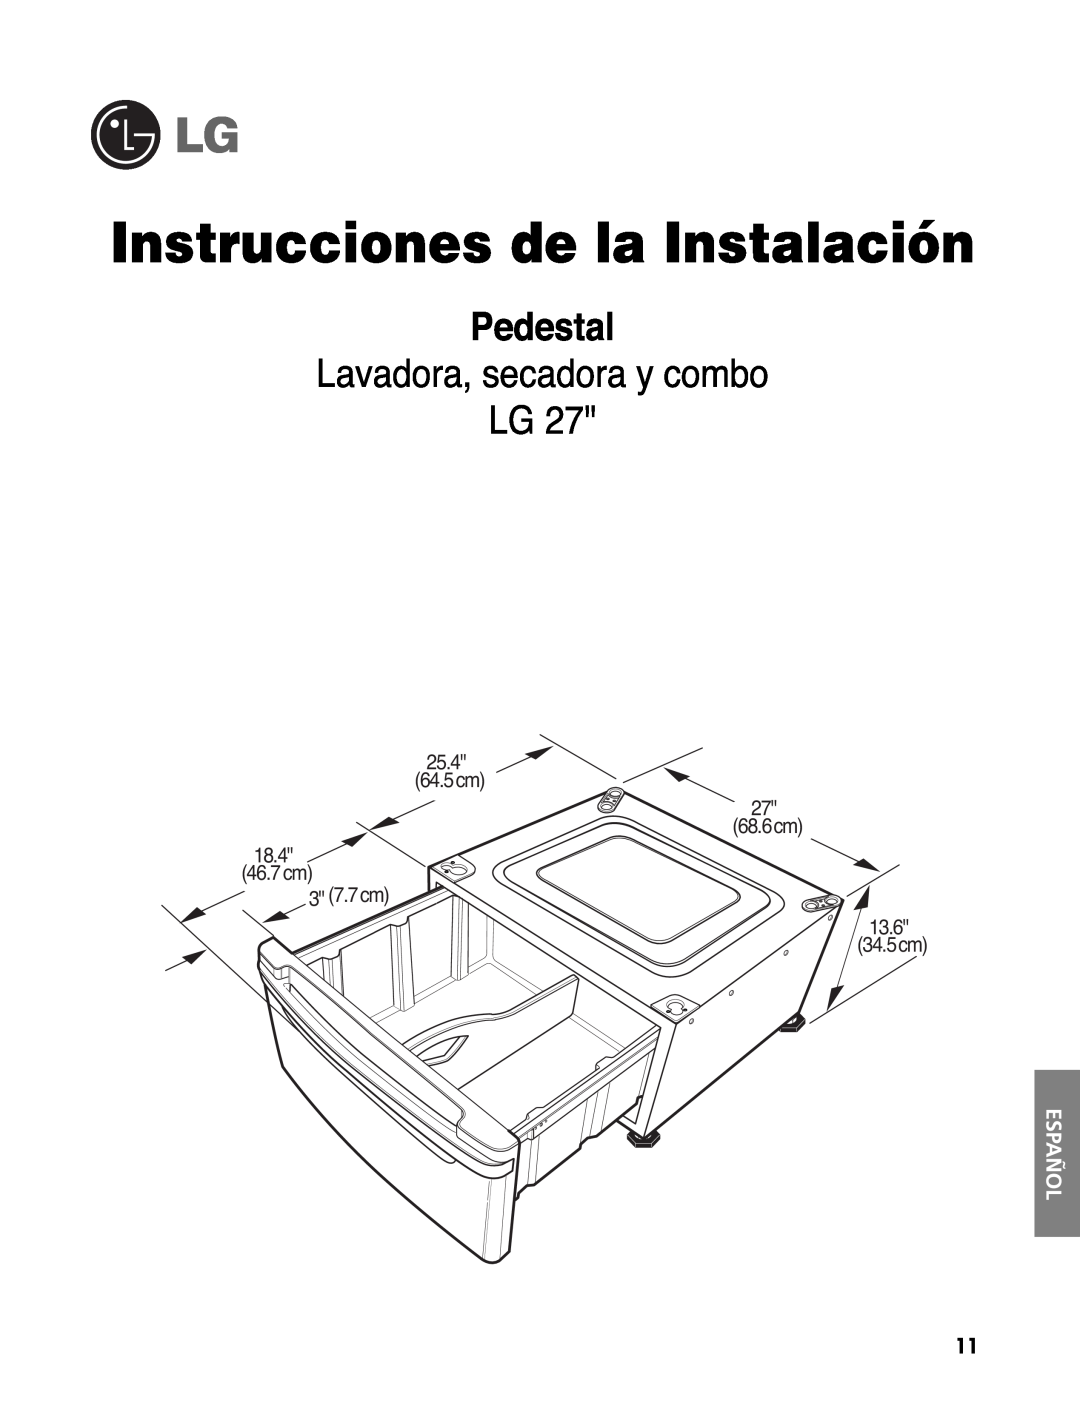 LG Electronics 3828ER3020V installation instructions 25.4 64.5cm  27 68.6cm 18.4 46.7cm 3 7.7cm, 13.6  